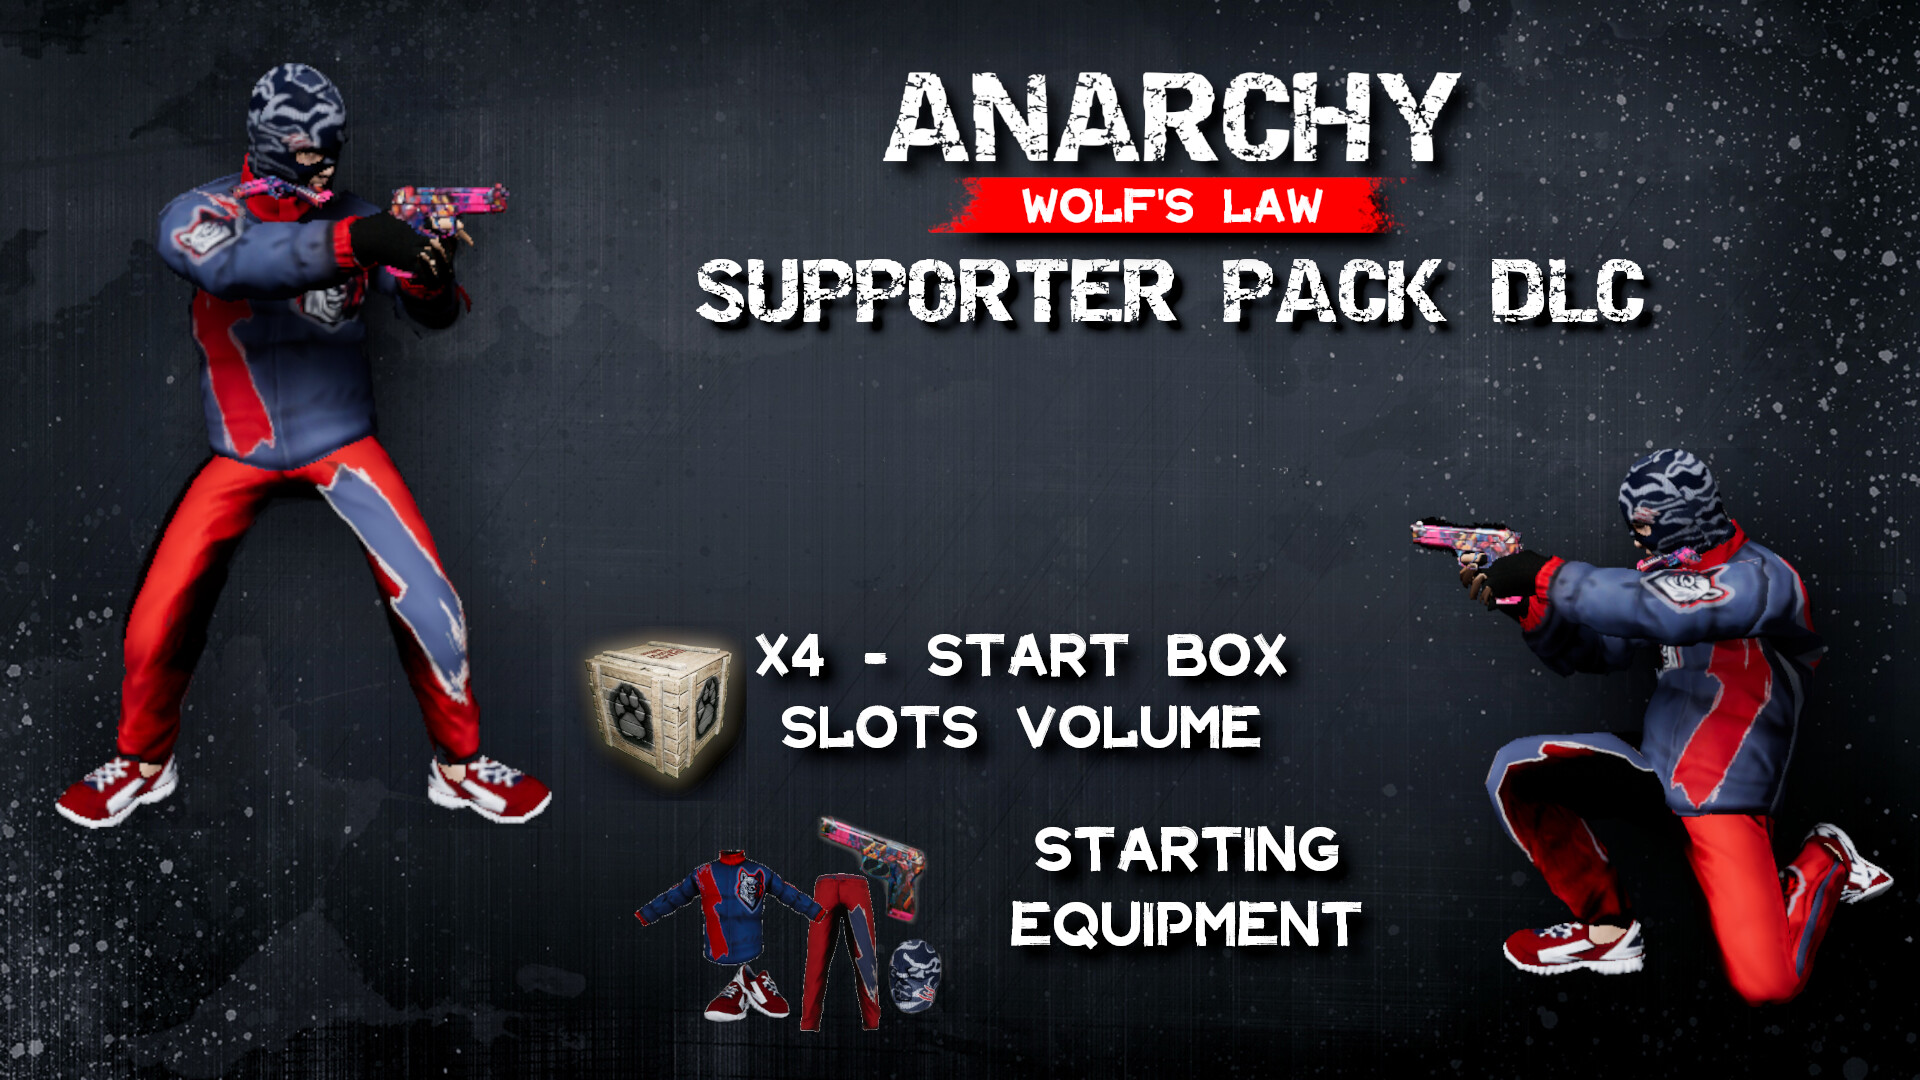 Anarchy: Supporter Pack DLC Featured Screenshot #1